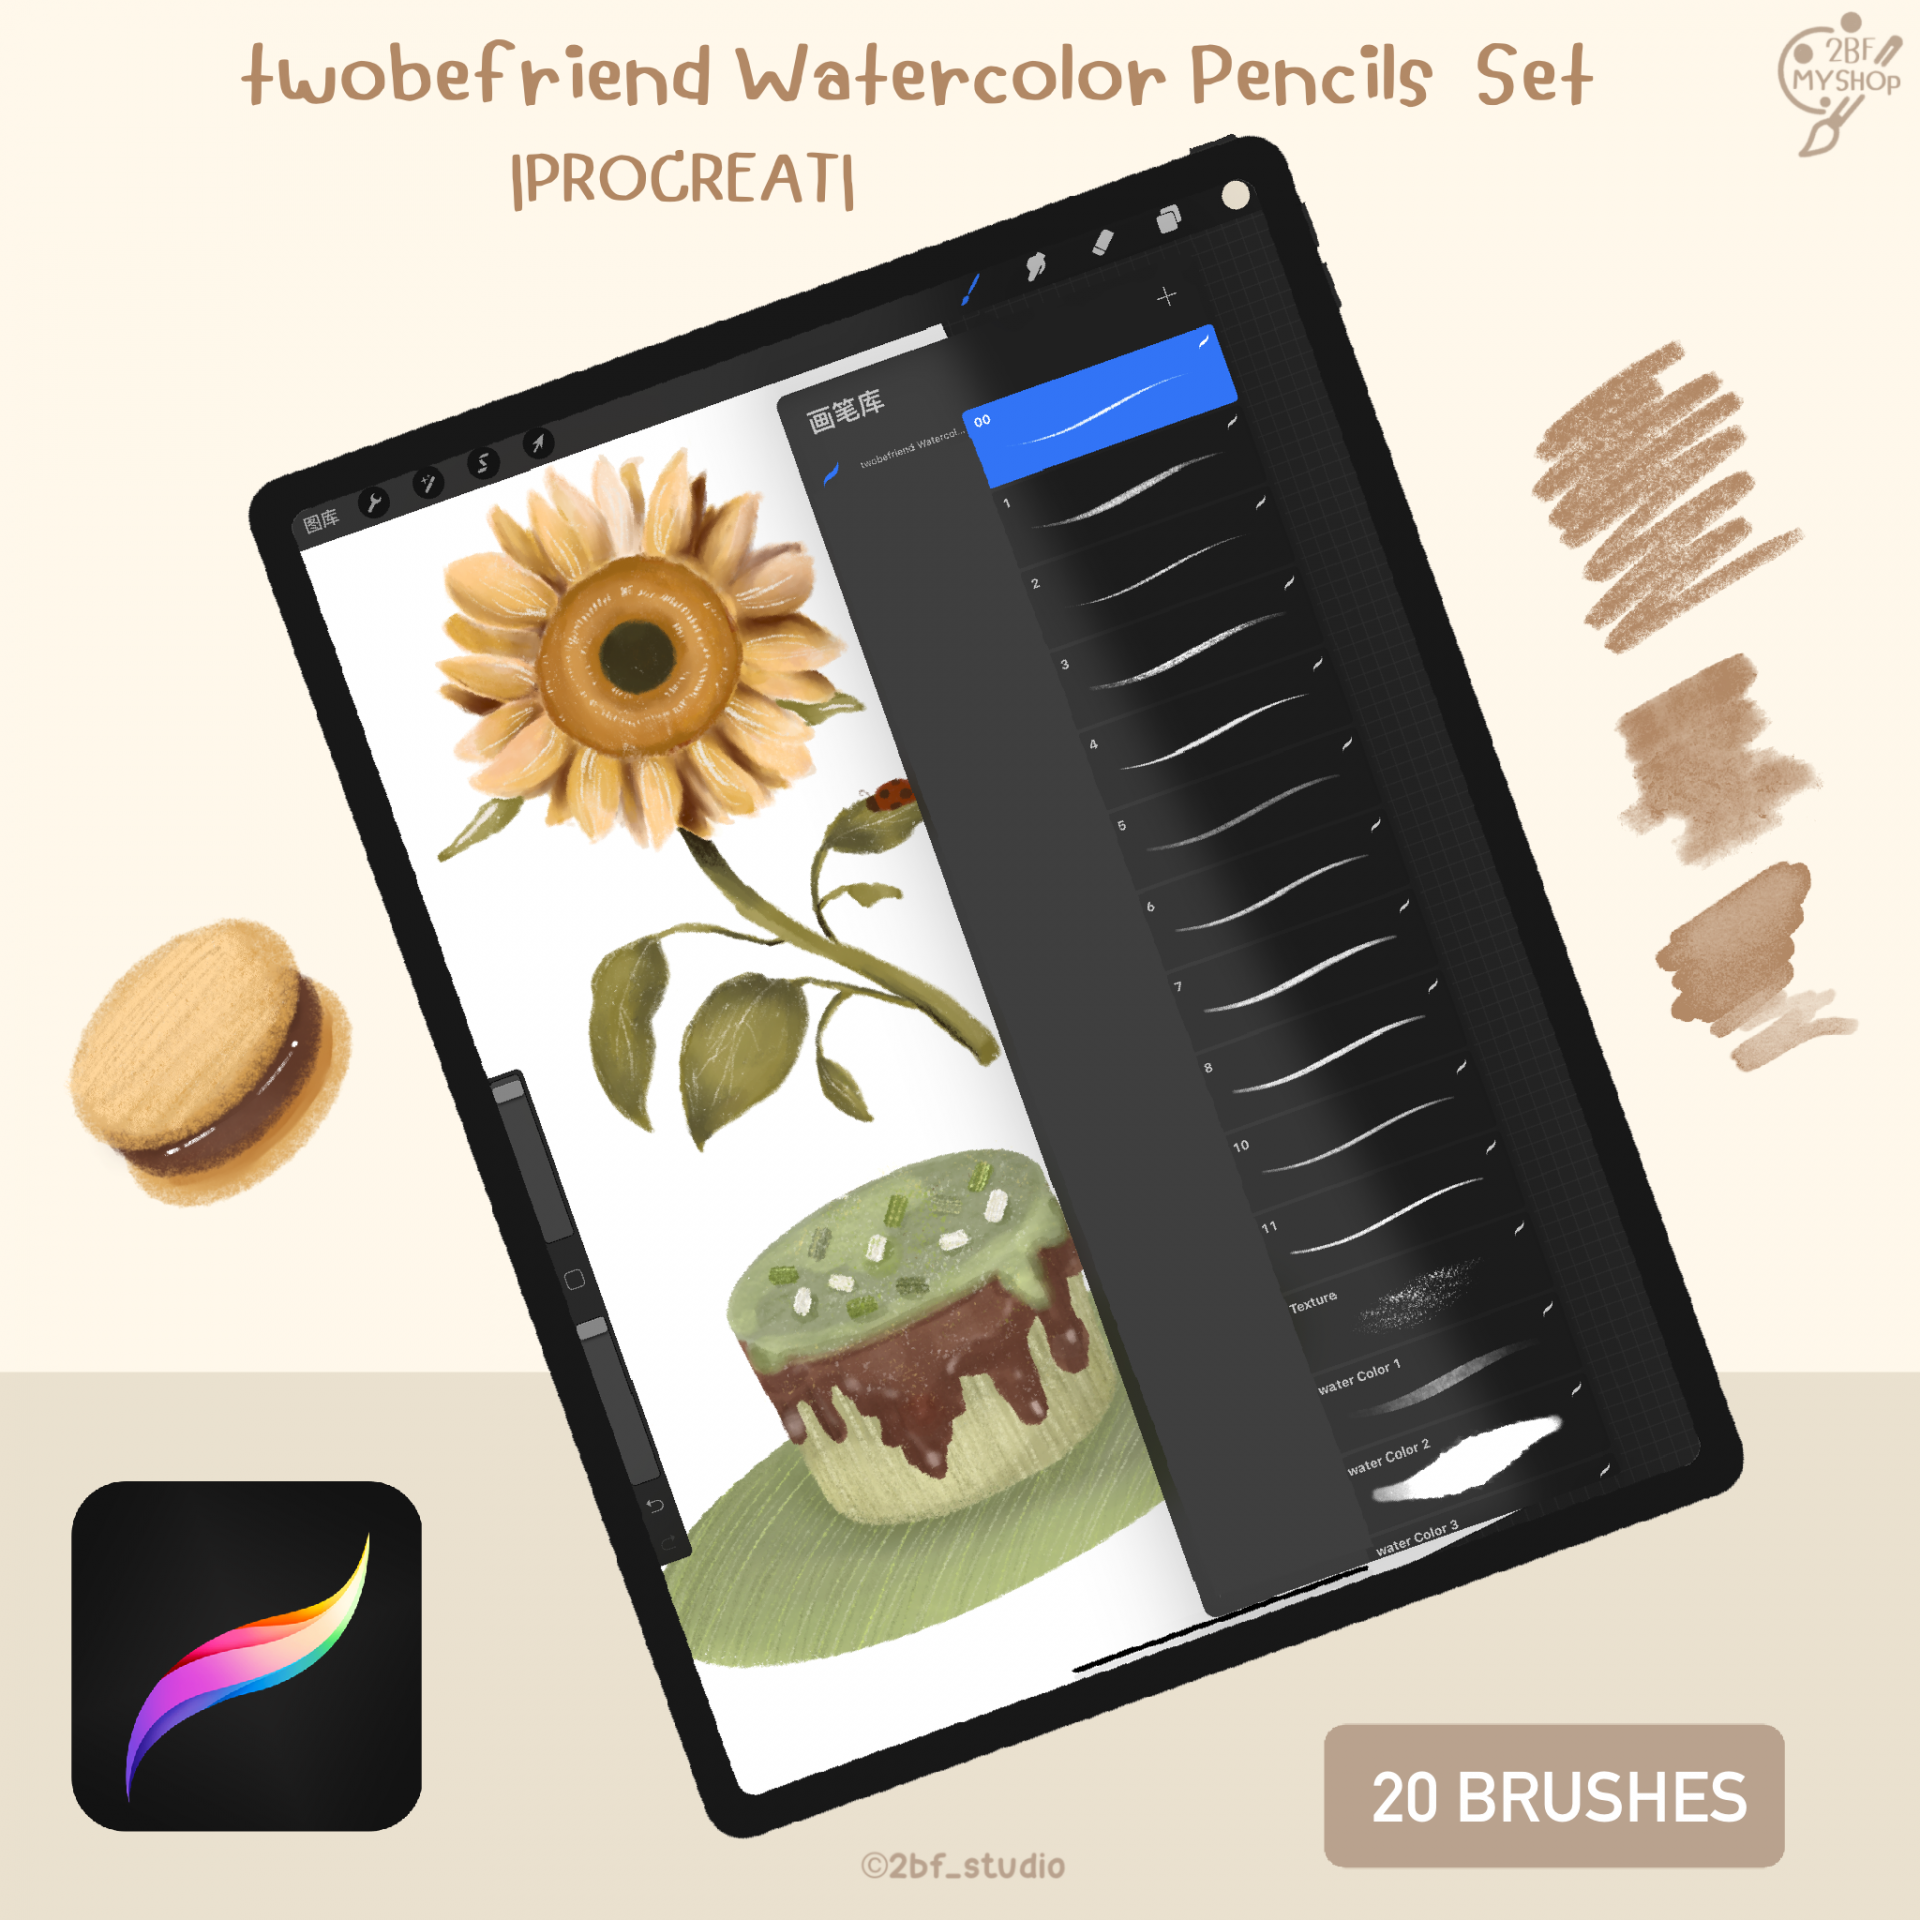 twobefriend Watercolor Pencils  Set |PROCREAT BRUSHES |